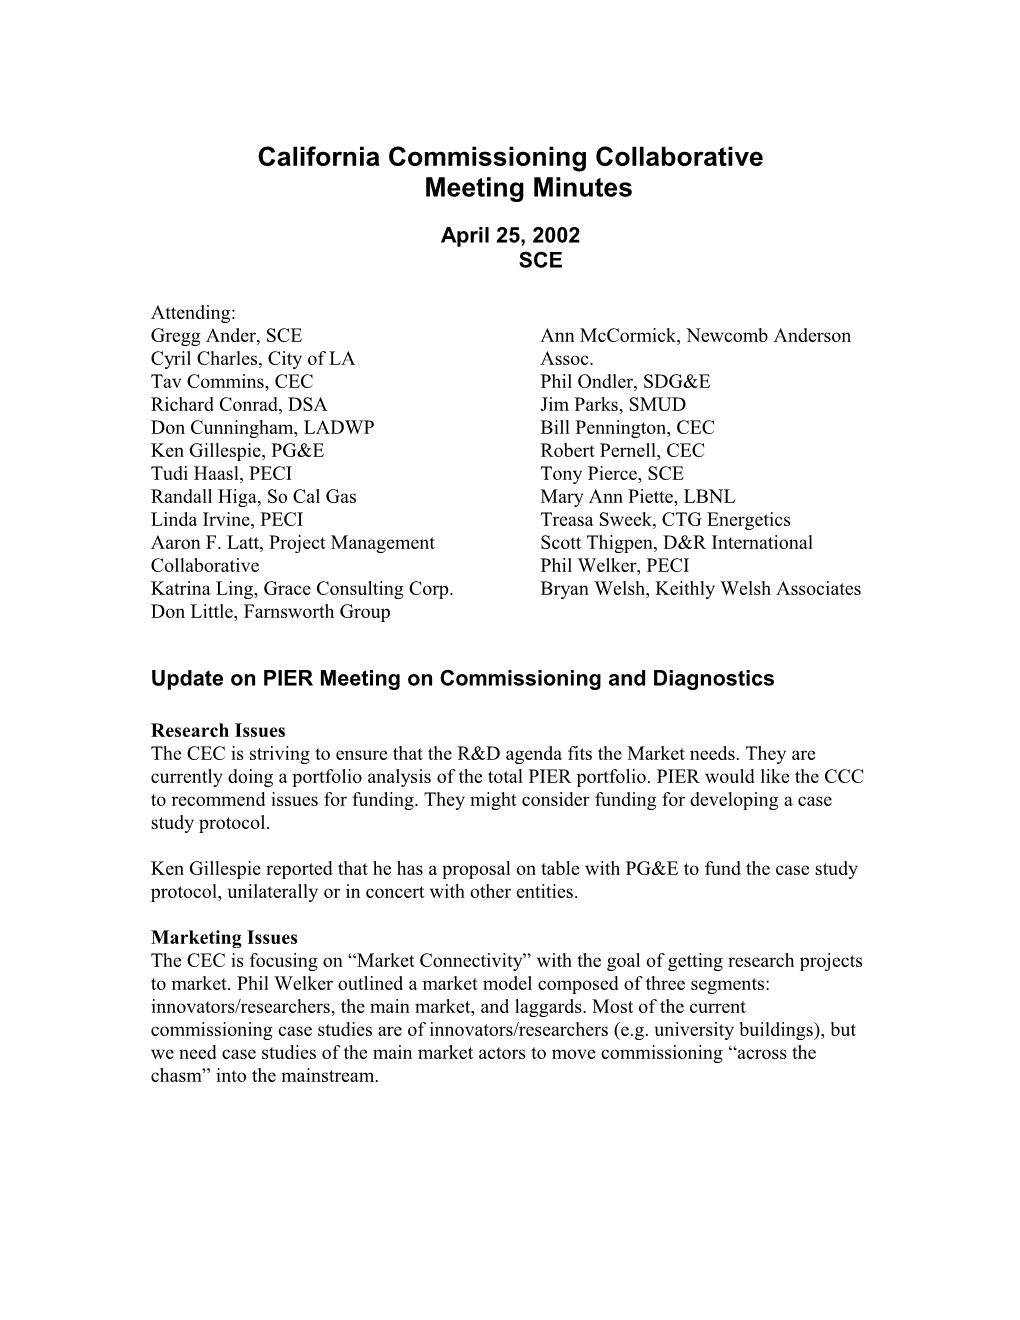 California Commissioning Collaborative s1